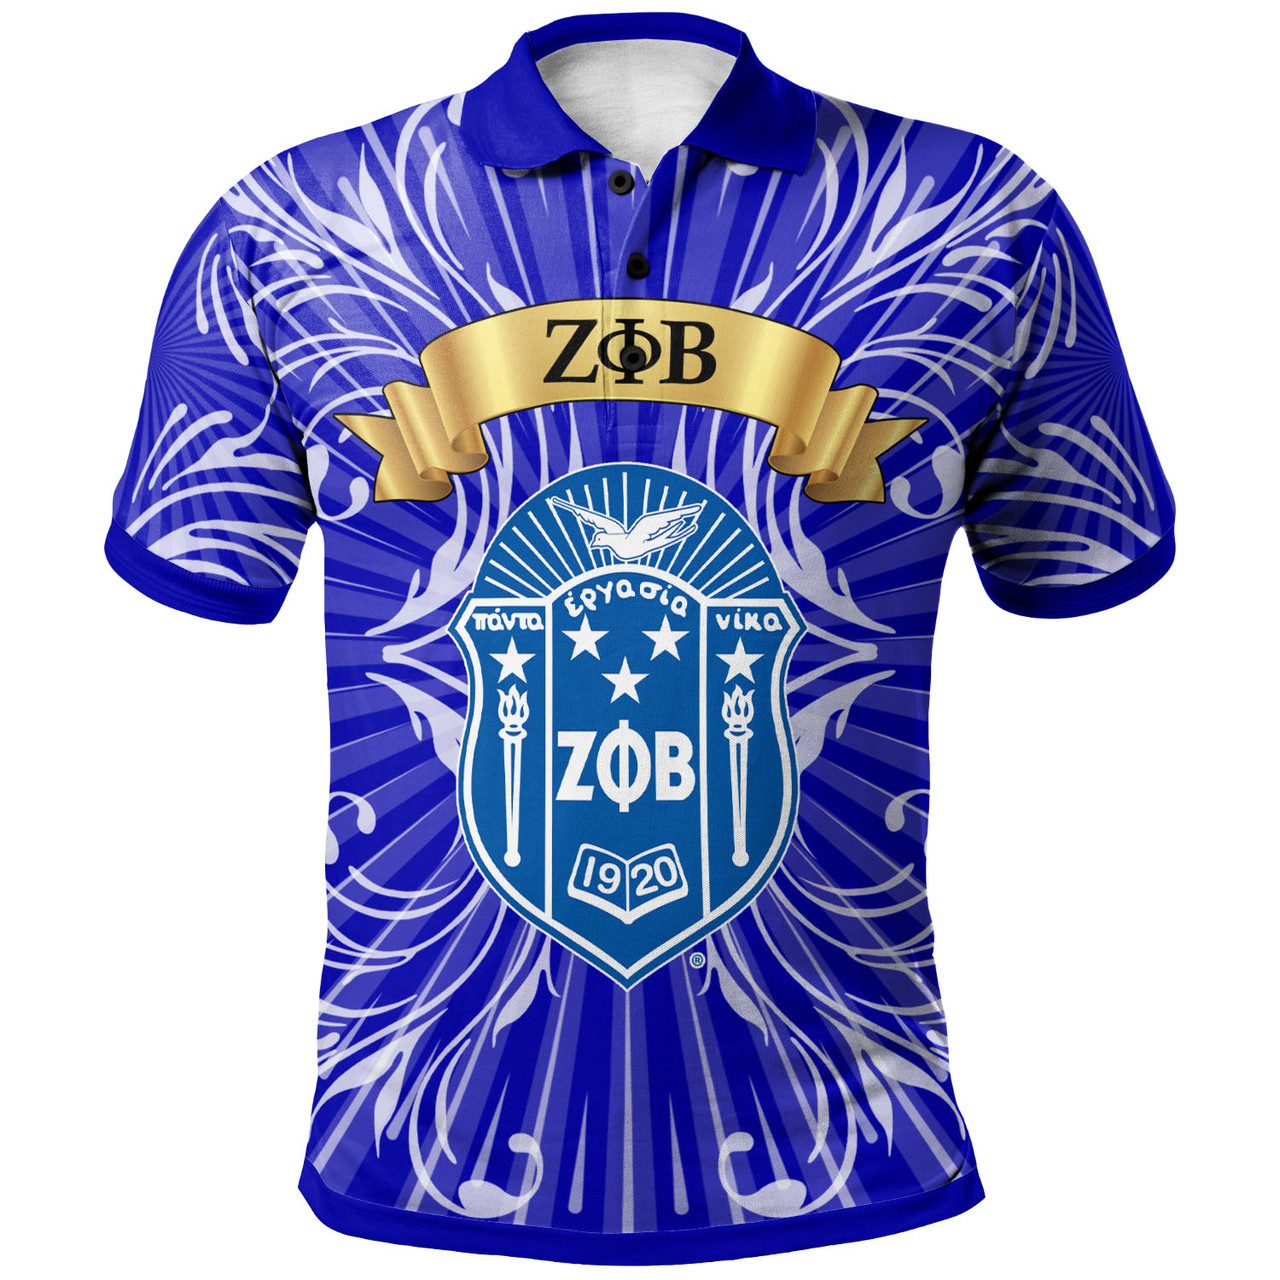 Zeta Phi Beta Polo Shirt – Sorority Vintage Style Polo Shirt